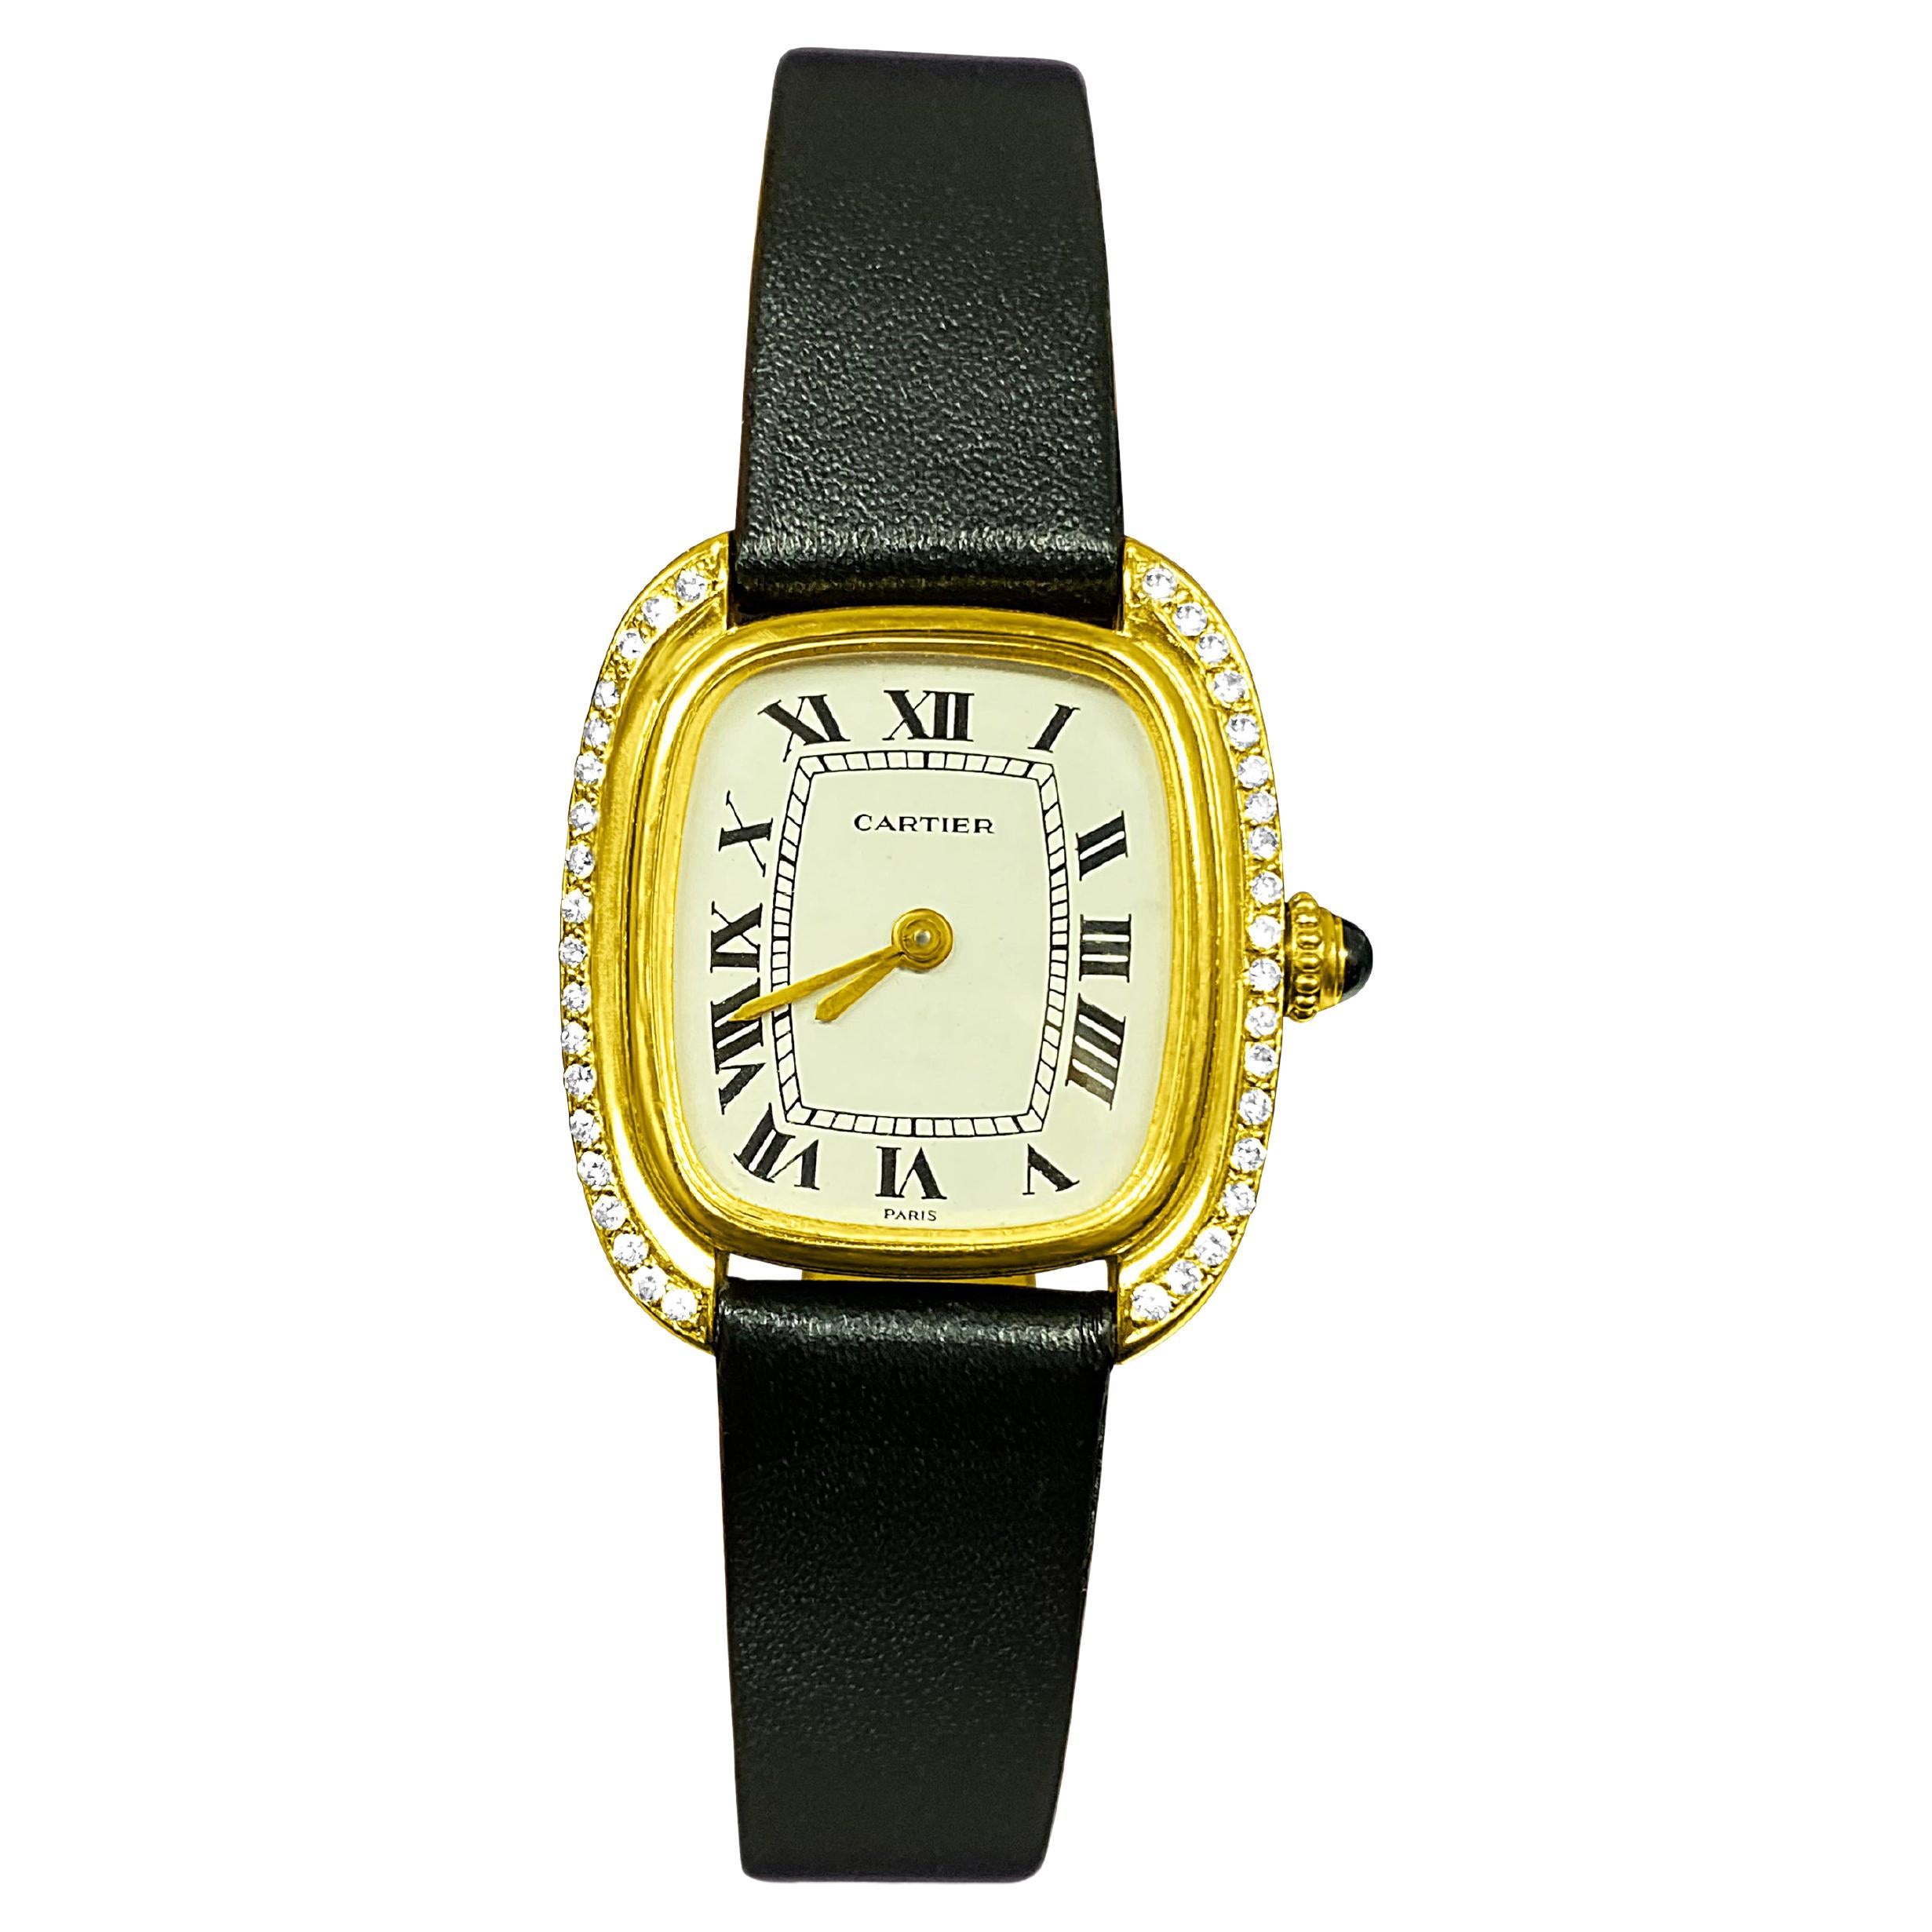 Ladies Vintage Cartier Gondole Watch with Diamond Bezel in Leather Strap